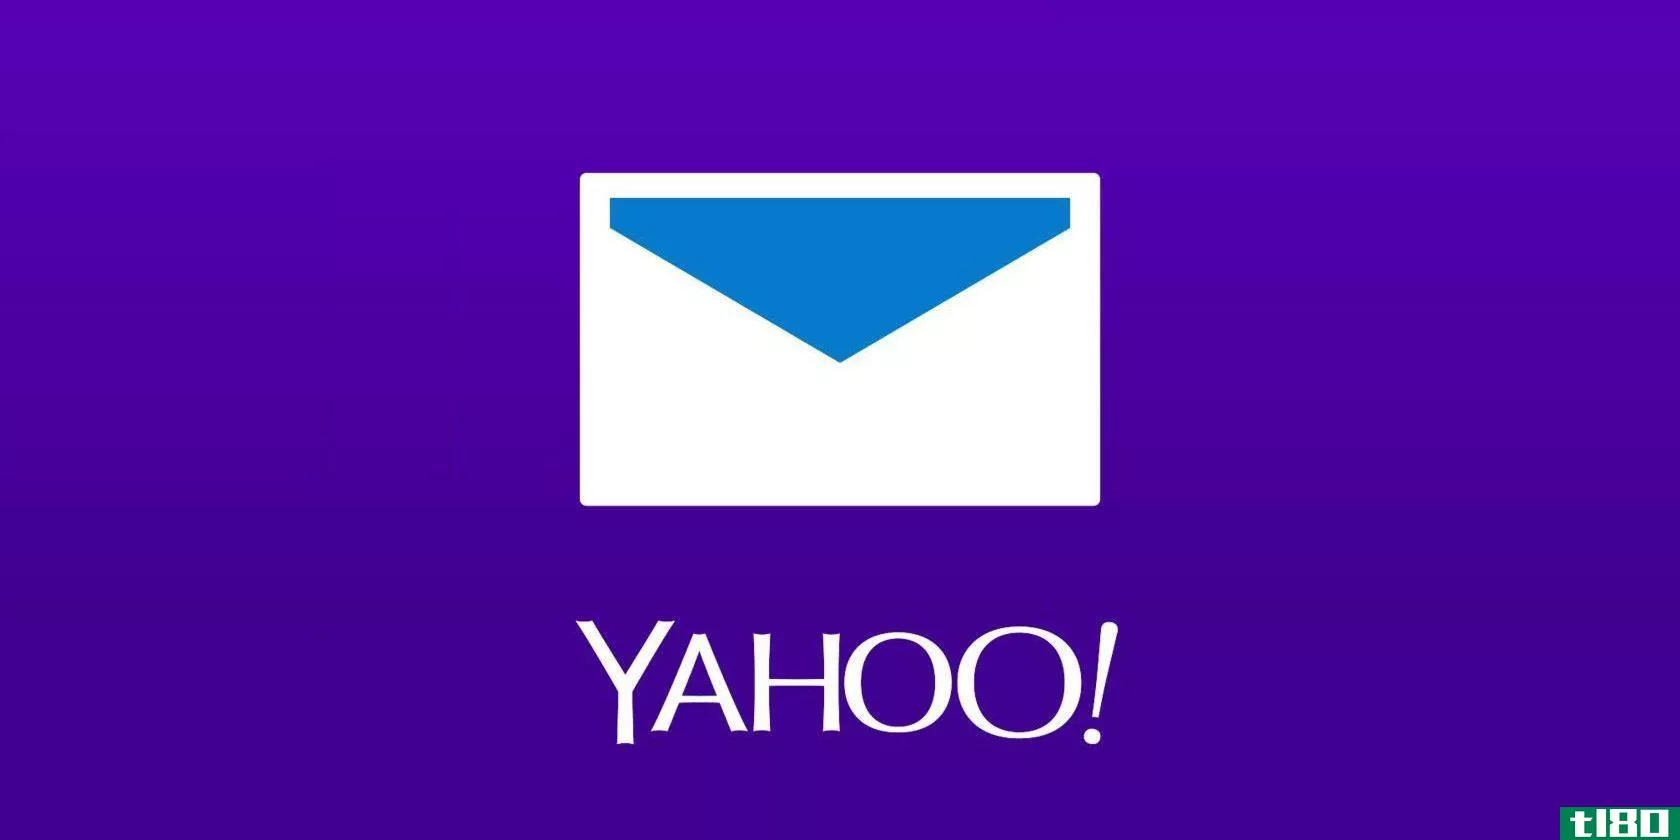 Yahoo!'s infamous data breach